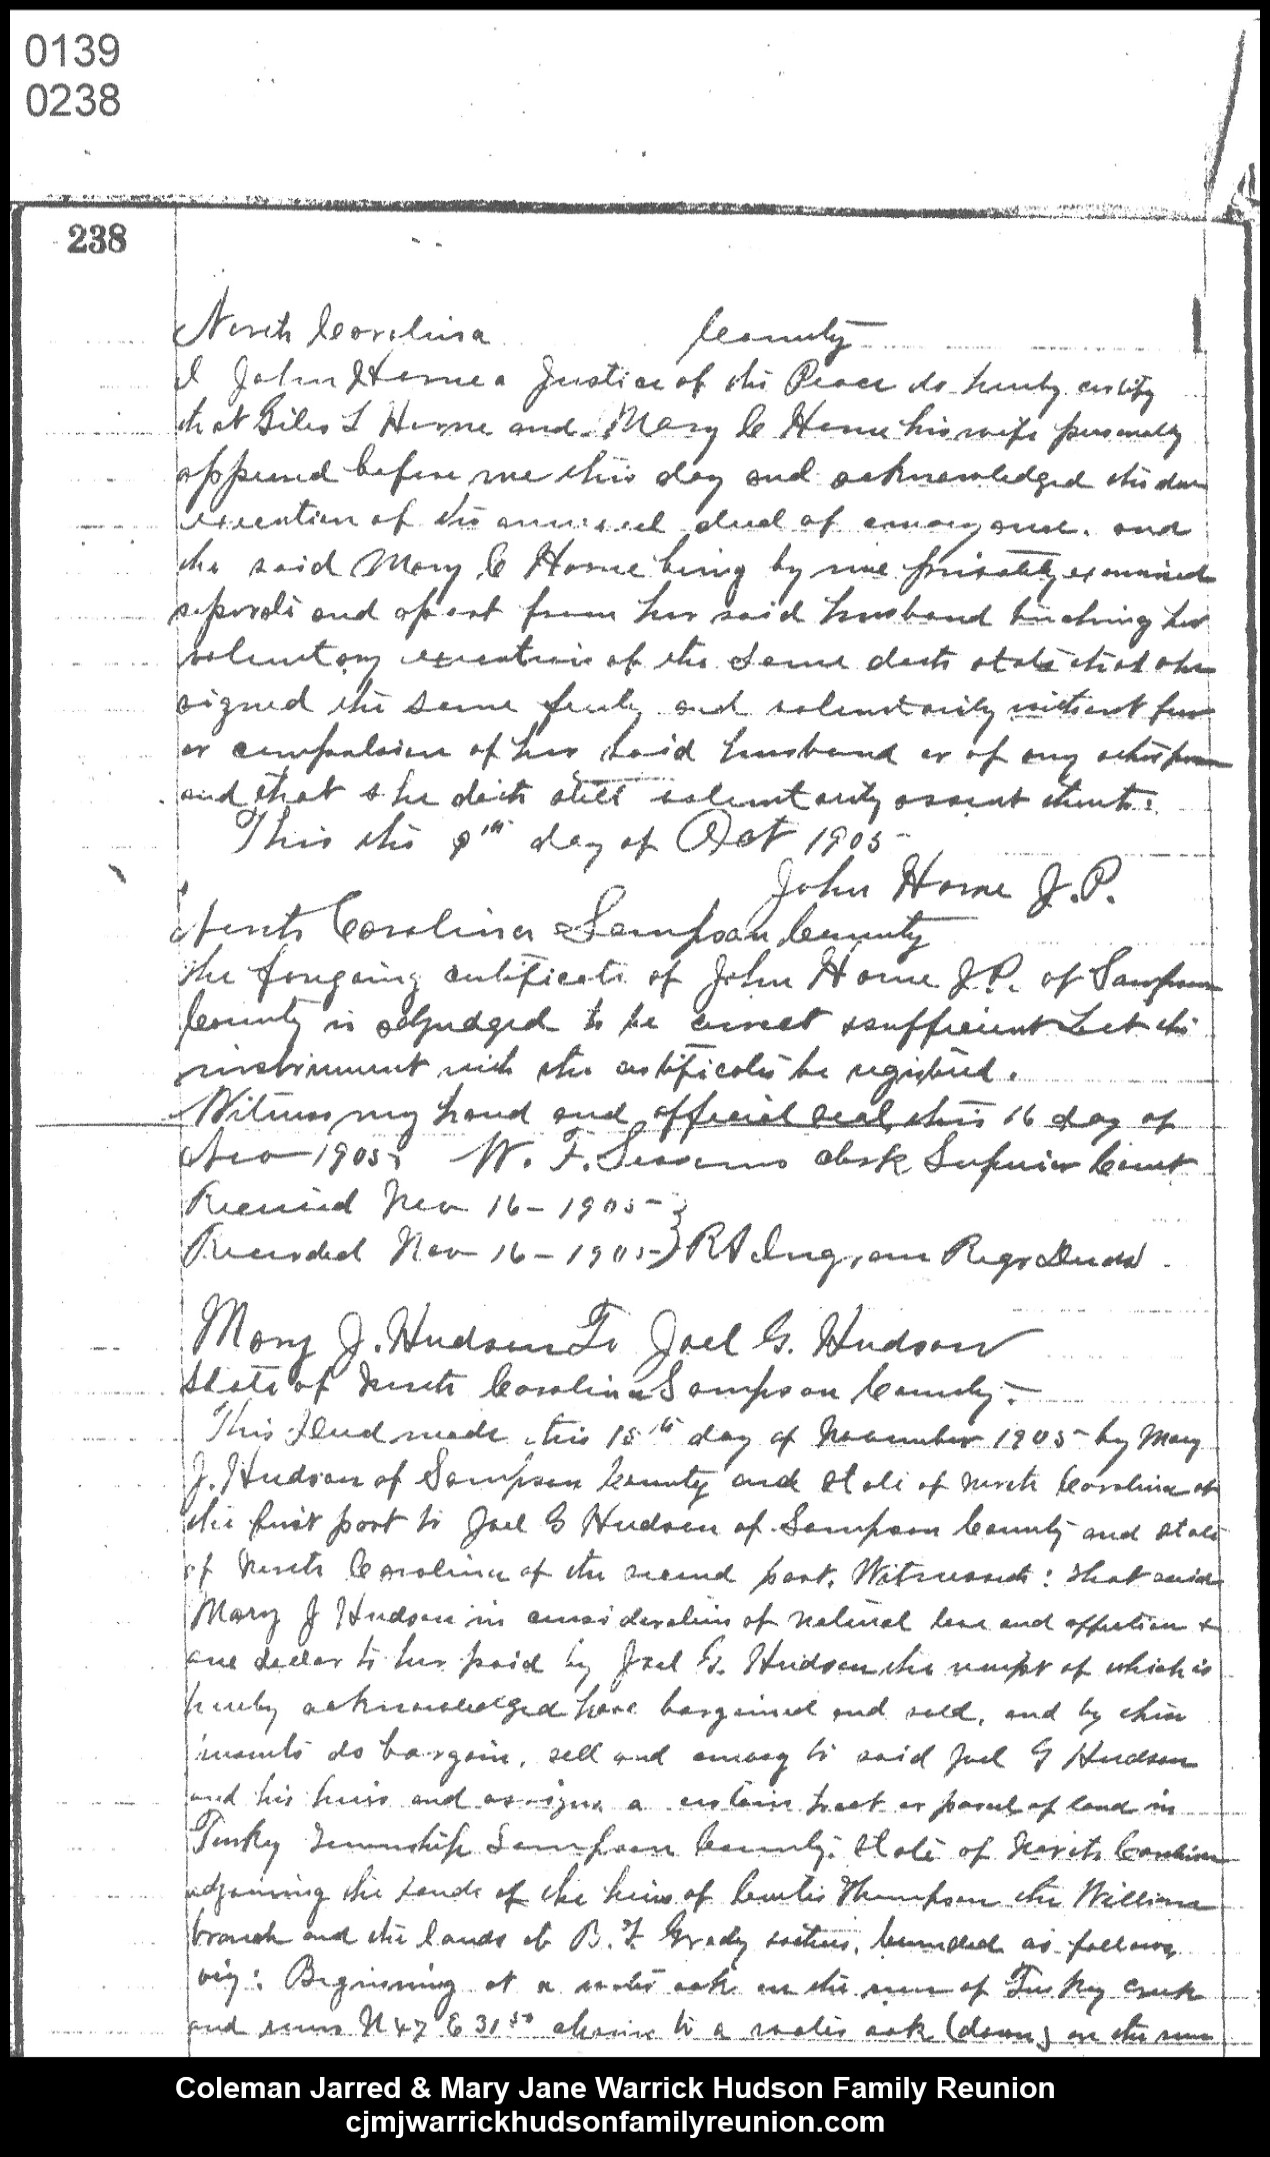 1905, 11-16 - Deed - MJ to Joel G. Hudson (page 1 of 2)